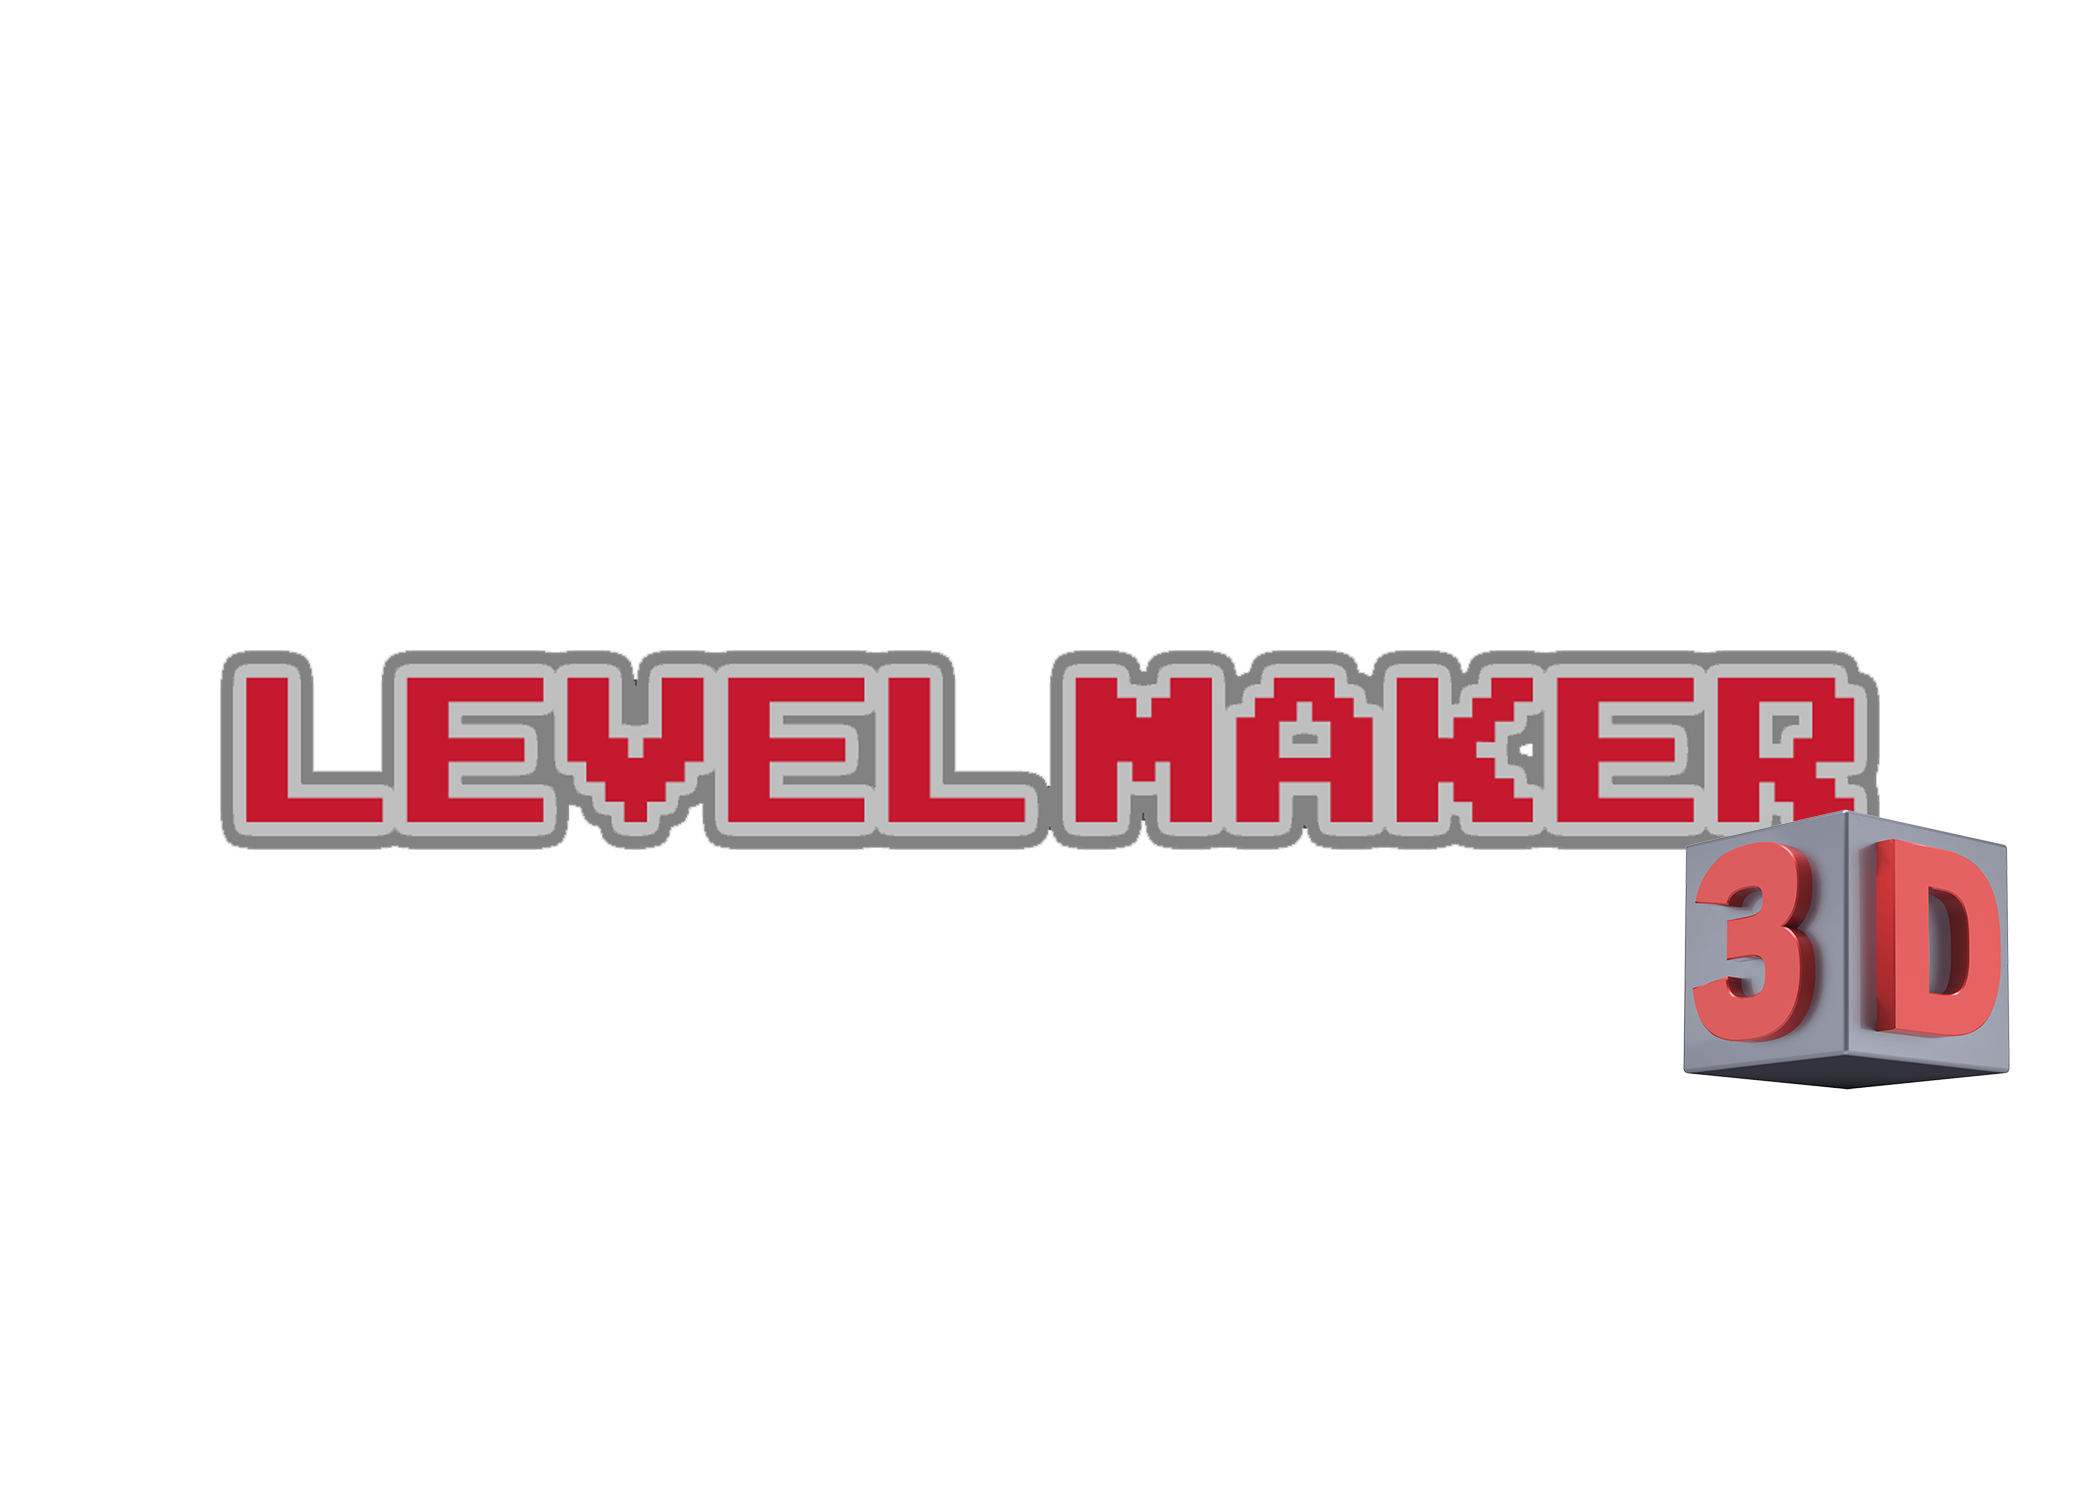 Level Maker 3D (prototype)